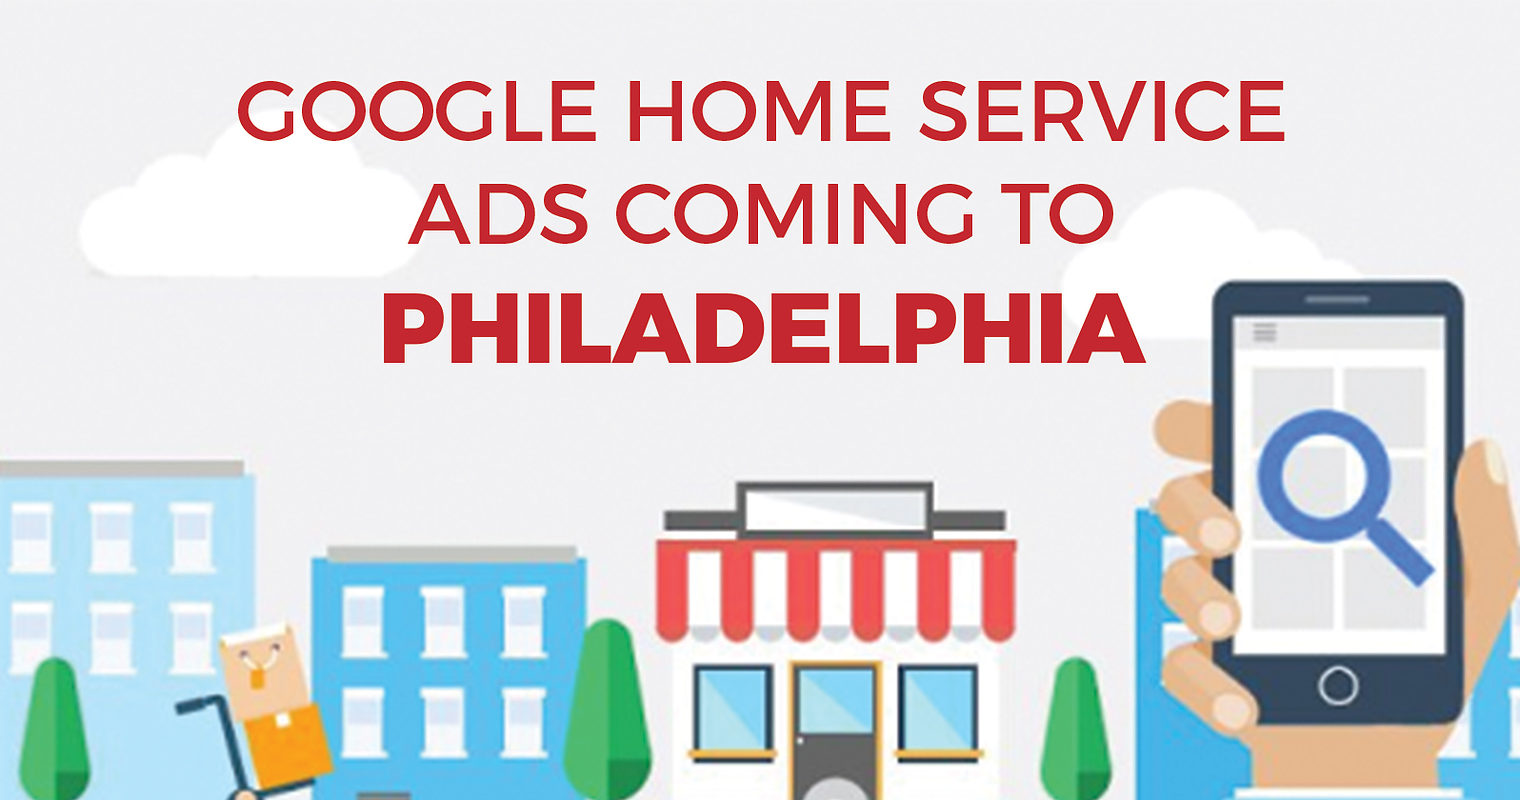 Google Home Service Ads Expanding to East Coast